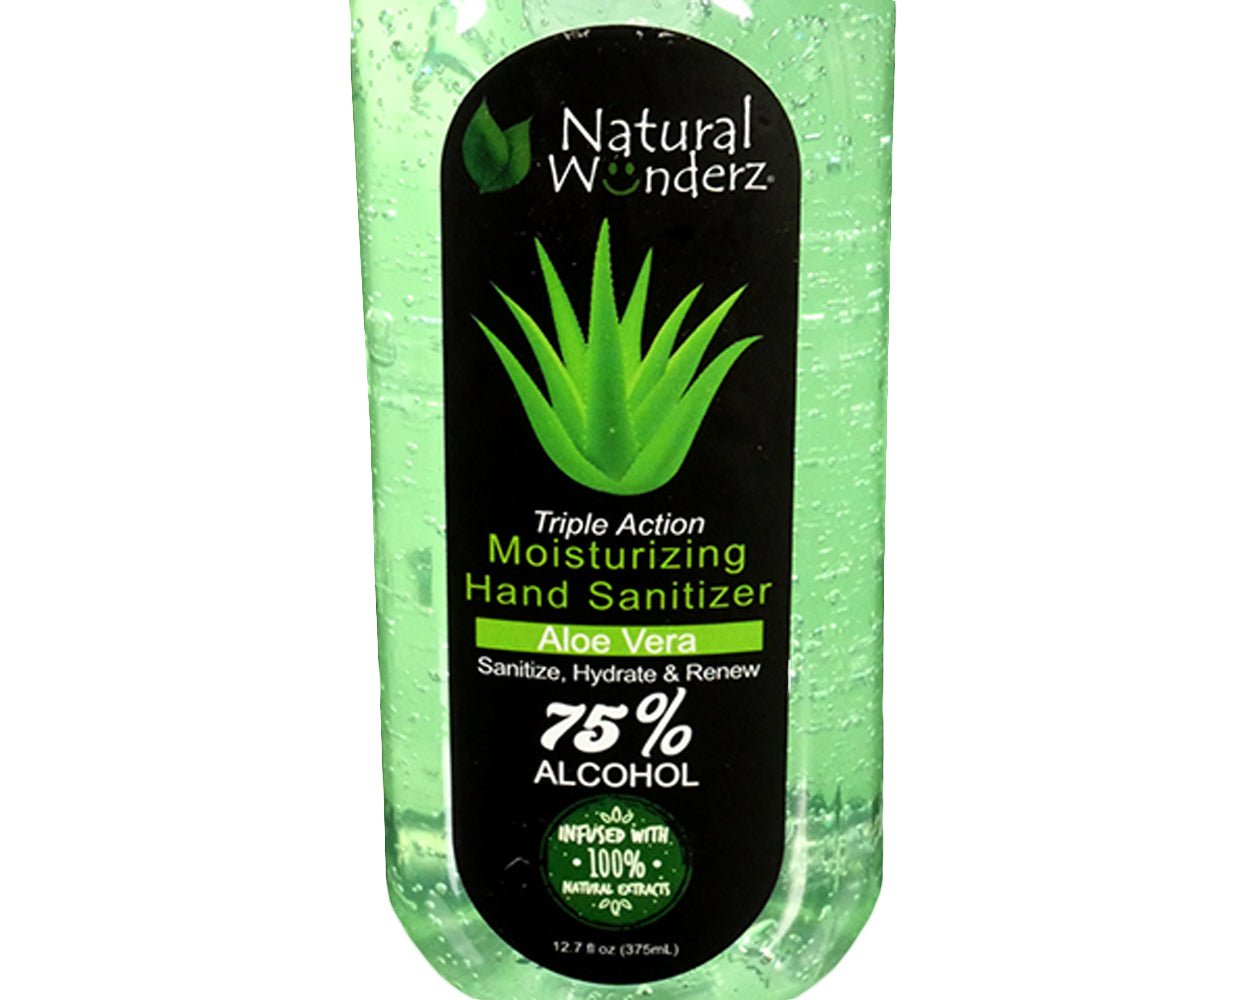 NATURAL WUNDERZ | Natural Extract Moisturizing Hand Sanitizer with Aloe Vera - 12oz - 3